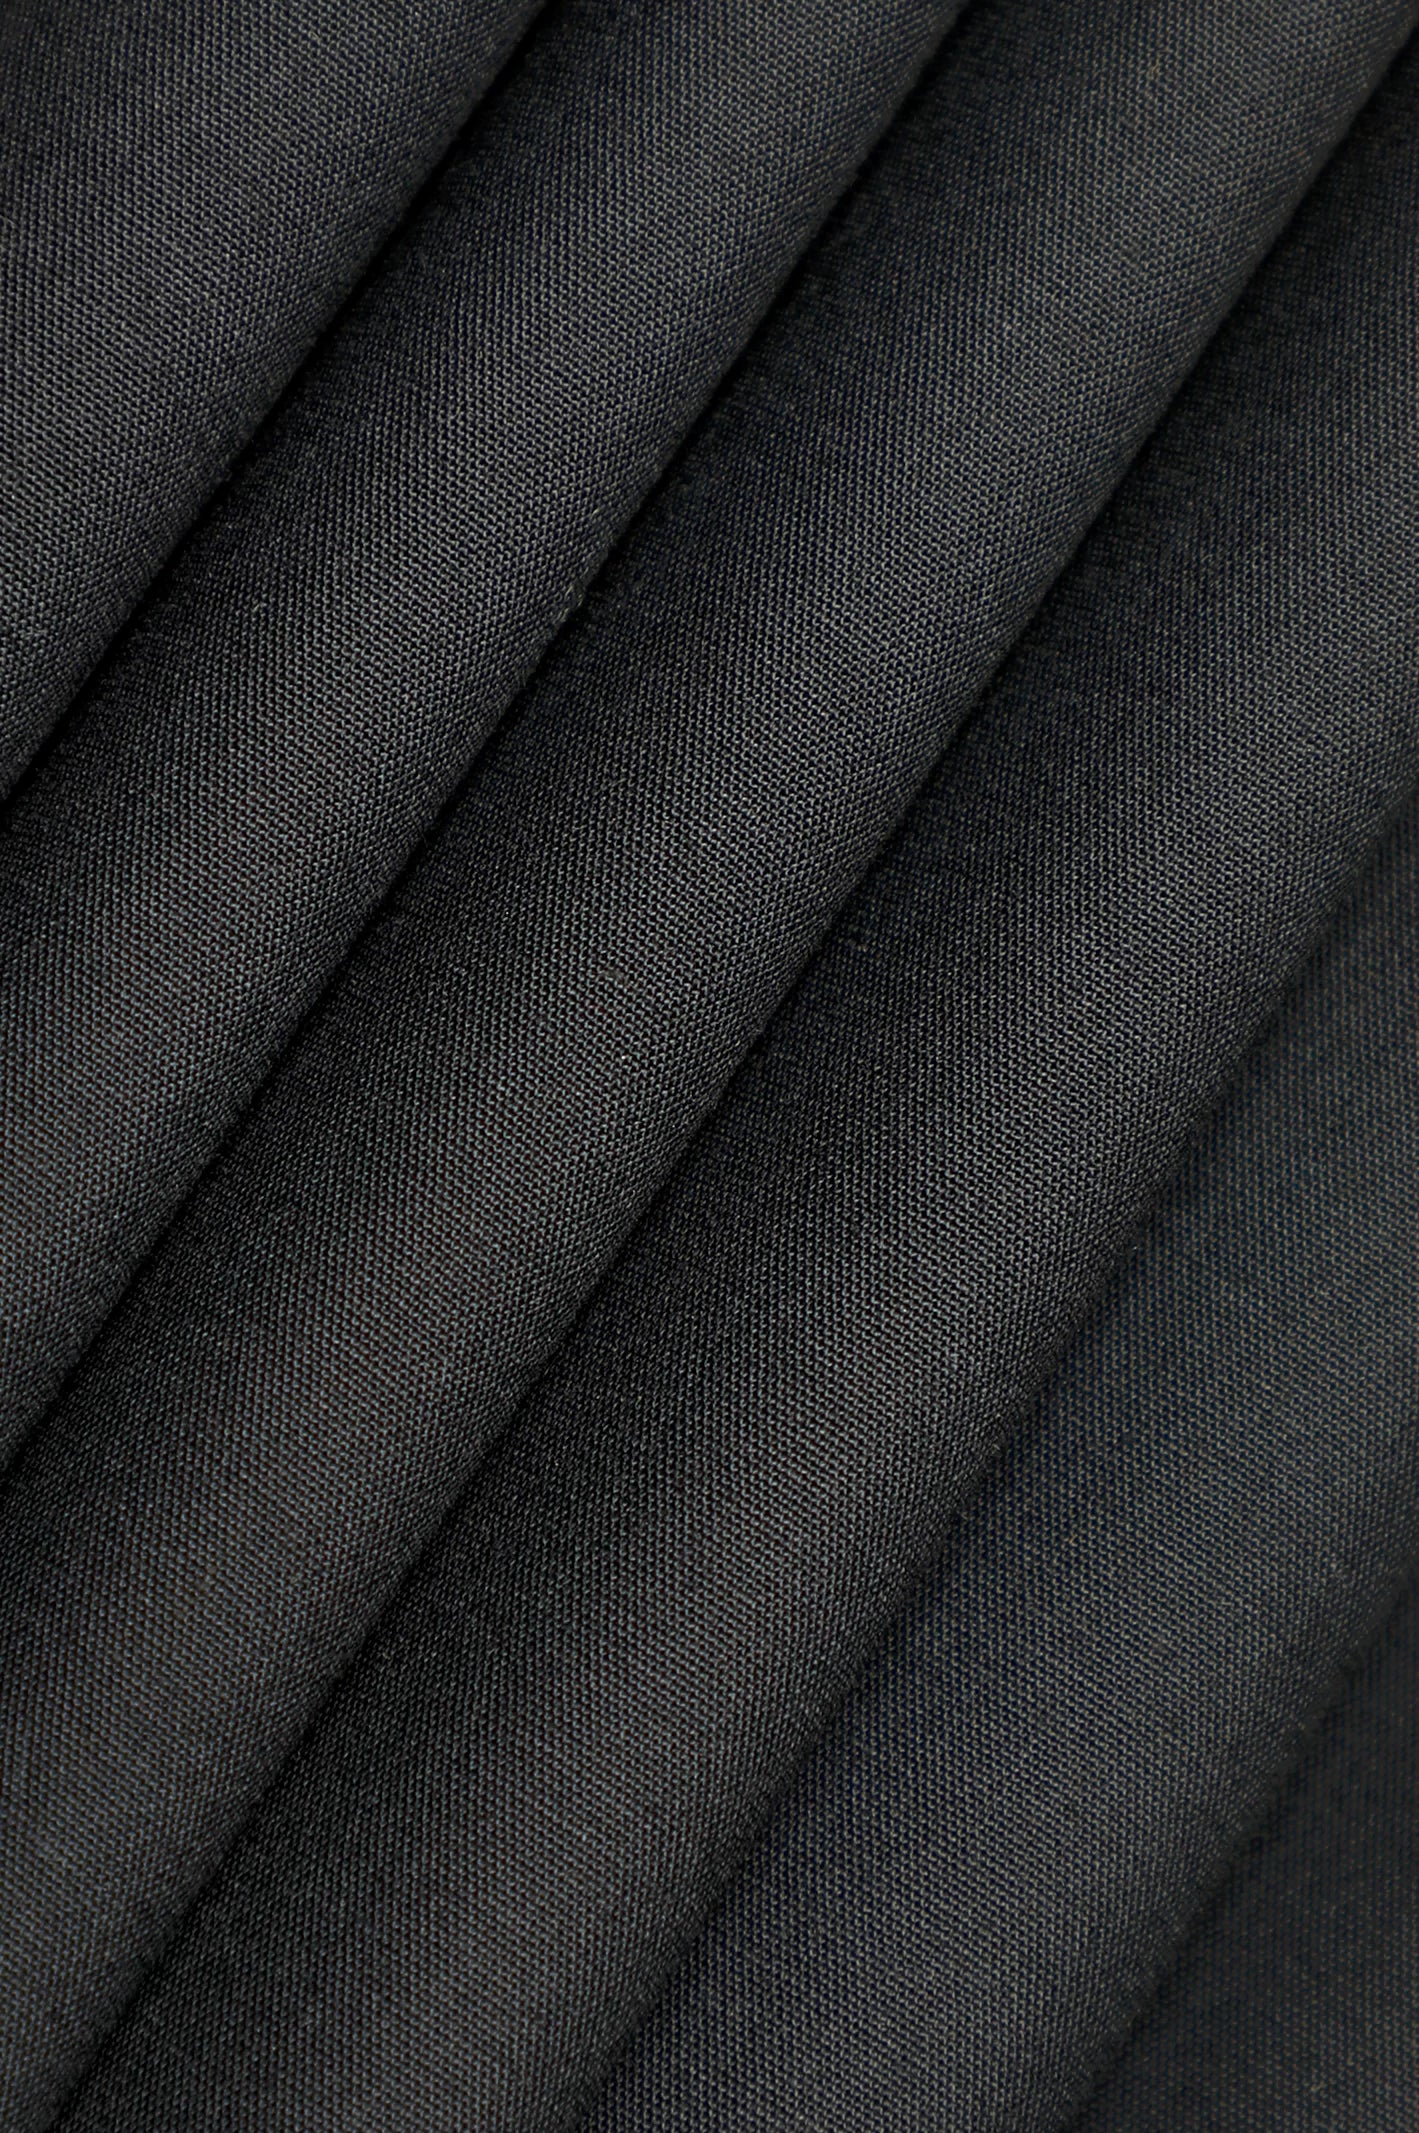 Black Wash & Wear Unstitched Fabric for Men – Diners Pakistan